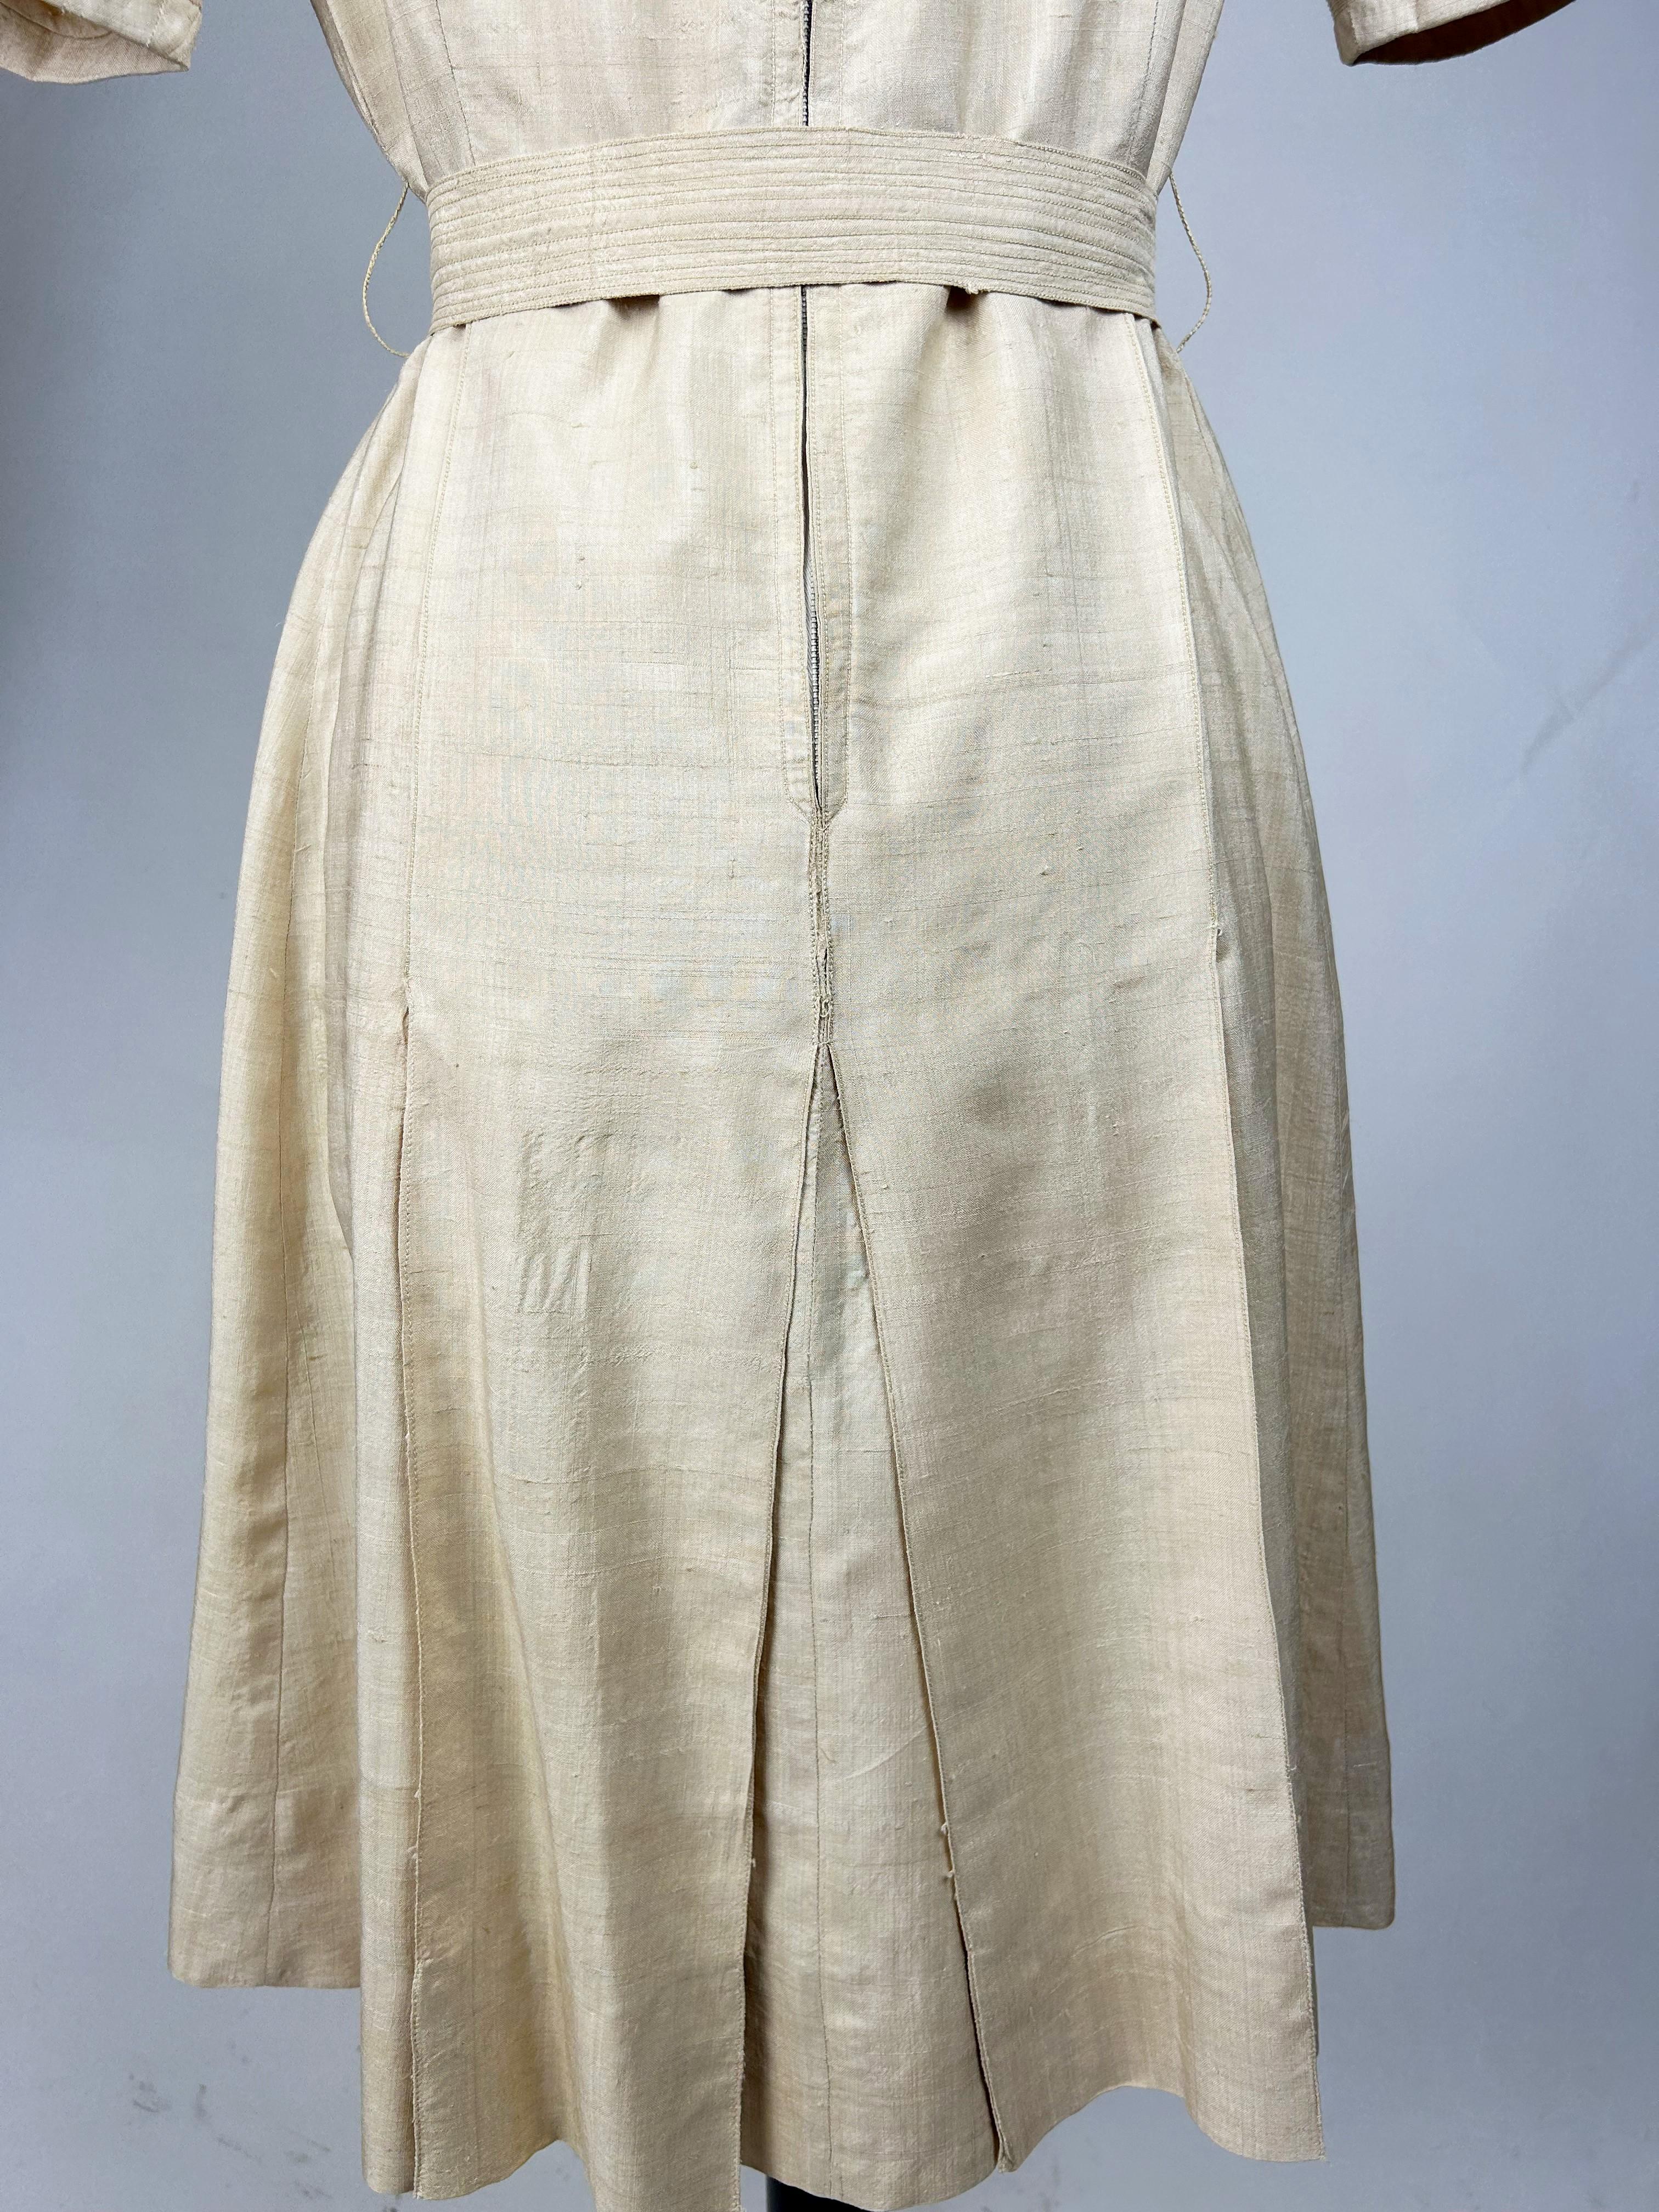 Unbleached wild silk summer dress - France Circa 1930-1940 For Sale 5